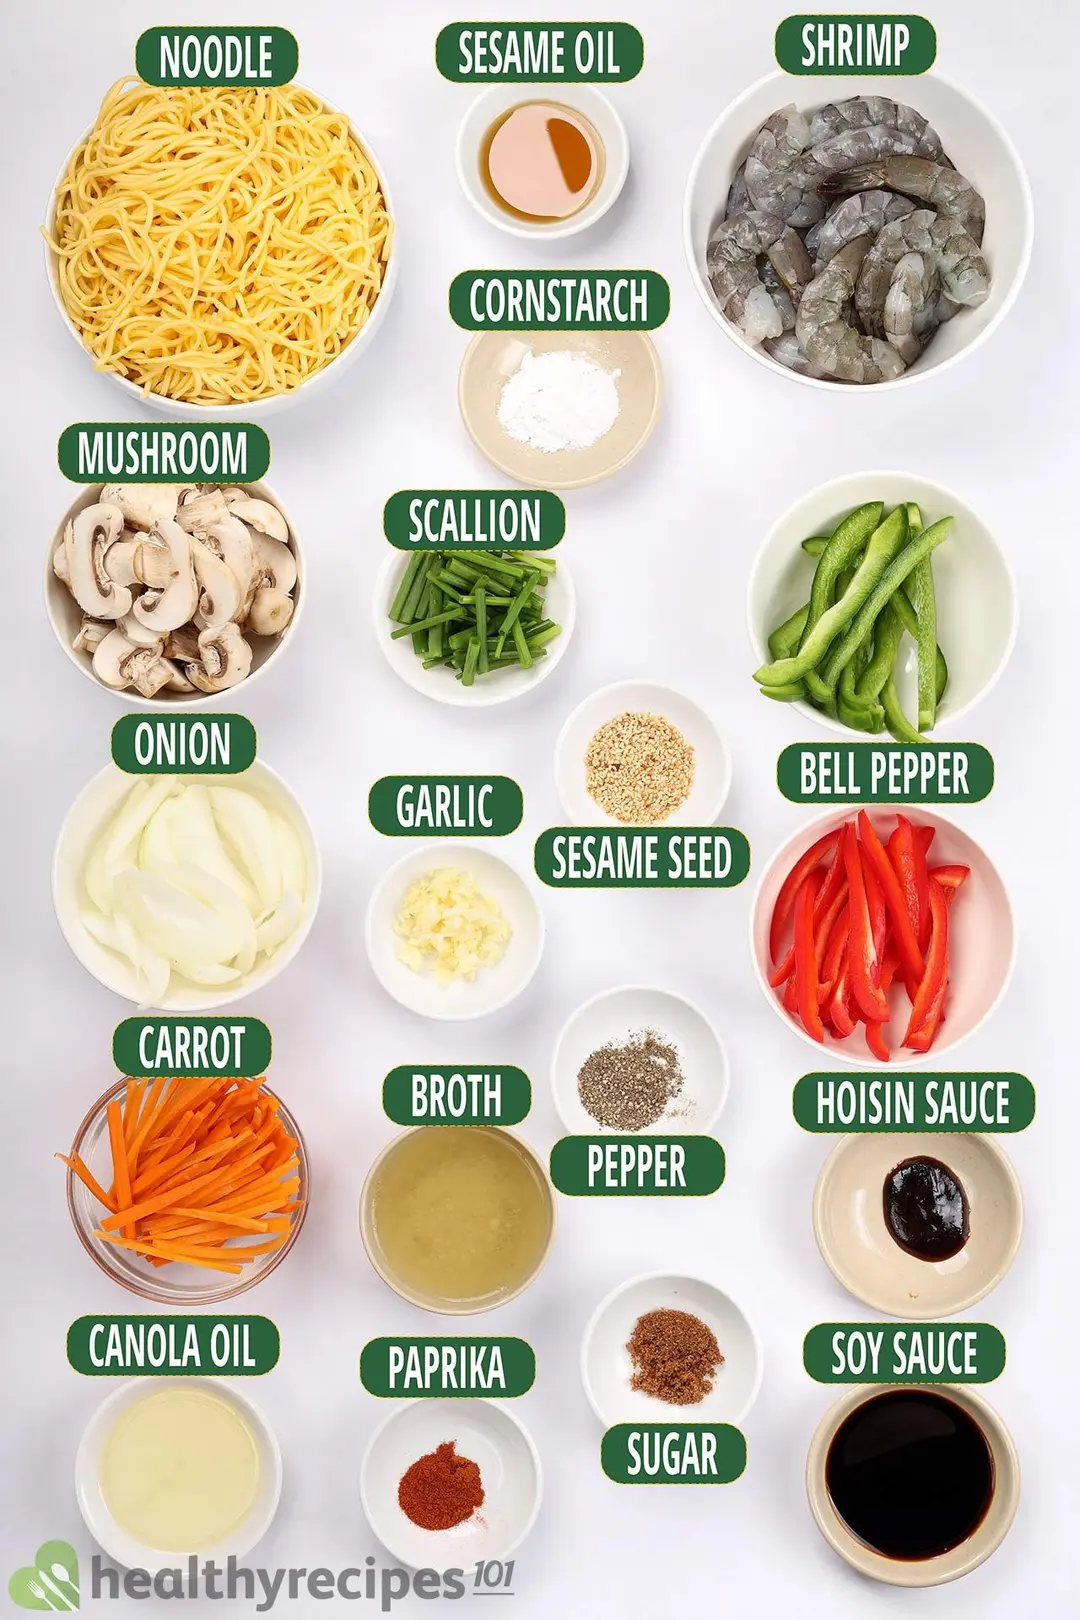 Main Ingredients of Shrimp Lo Mein